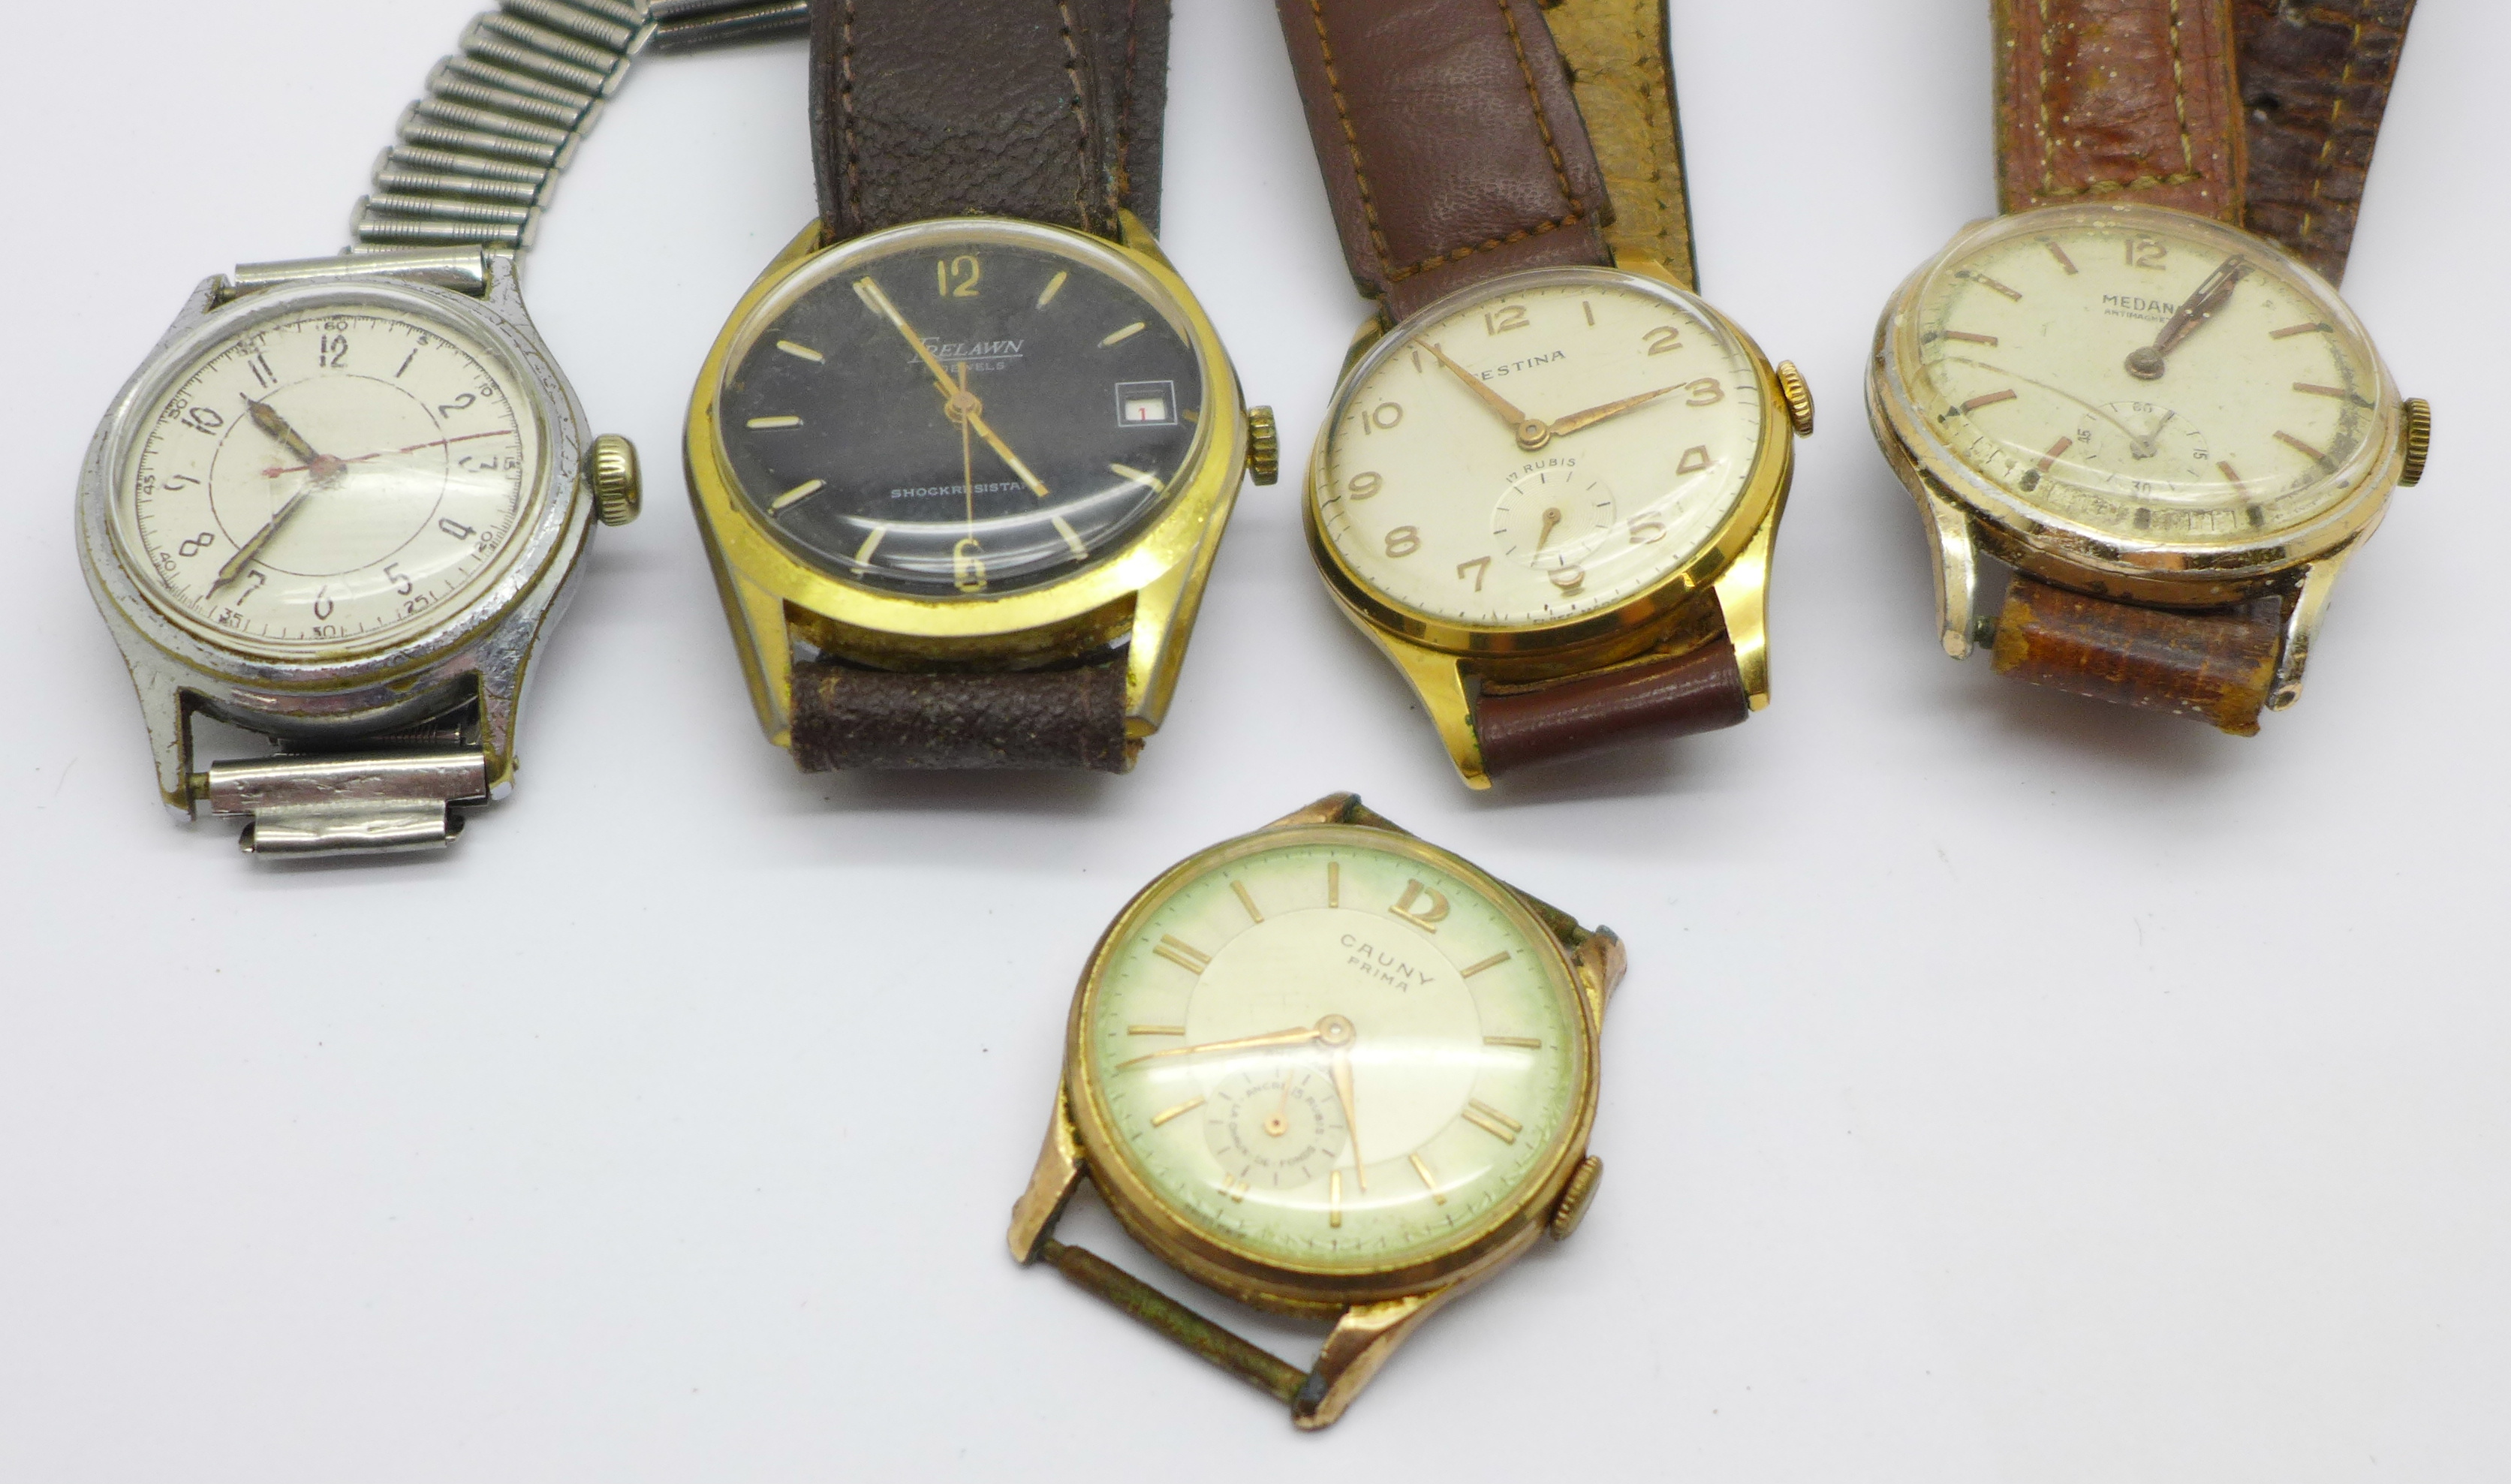 Five wristwatches including Festina